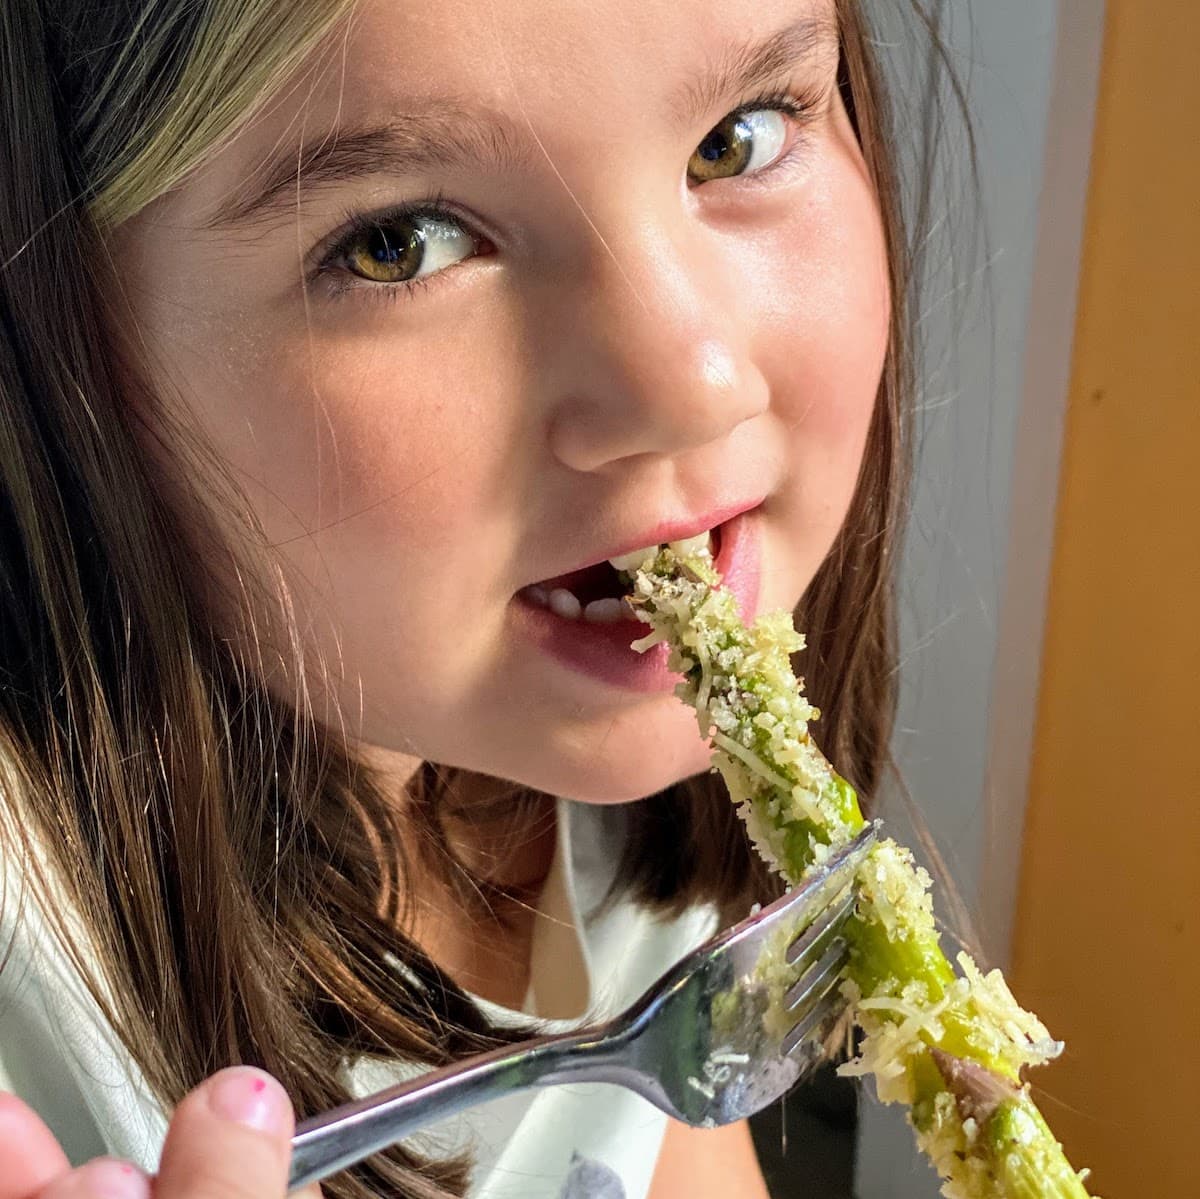 girl eating roasted asparagus